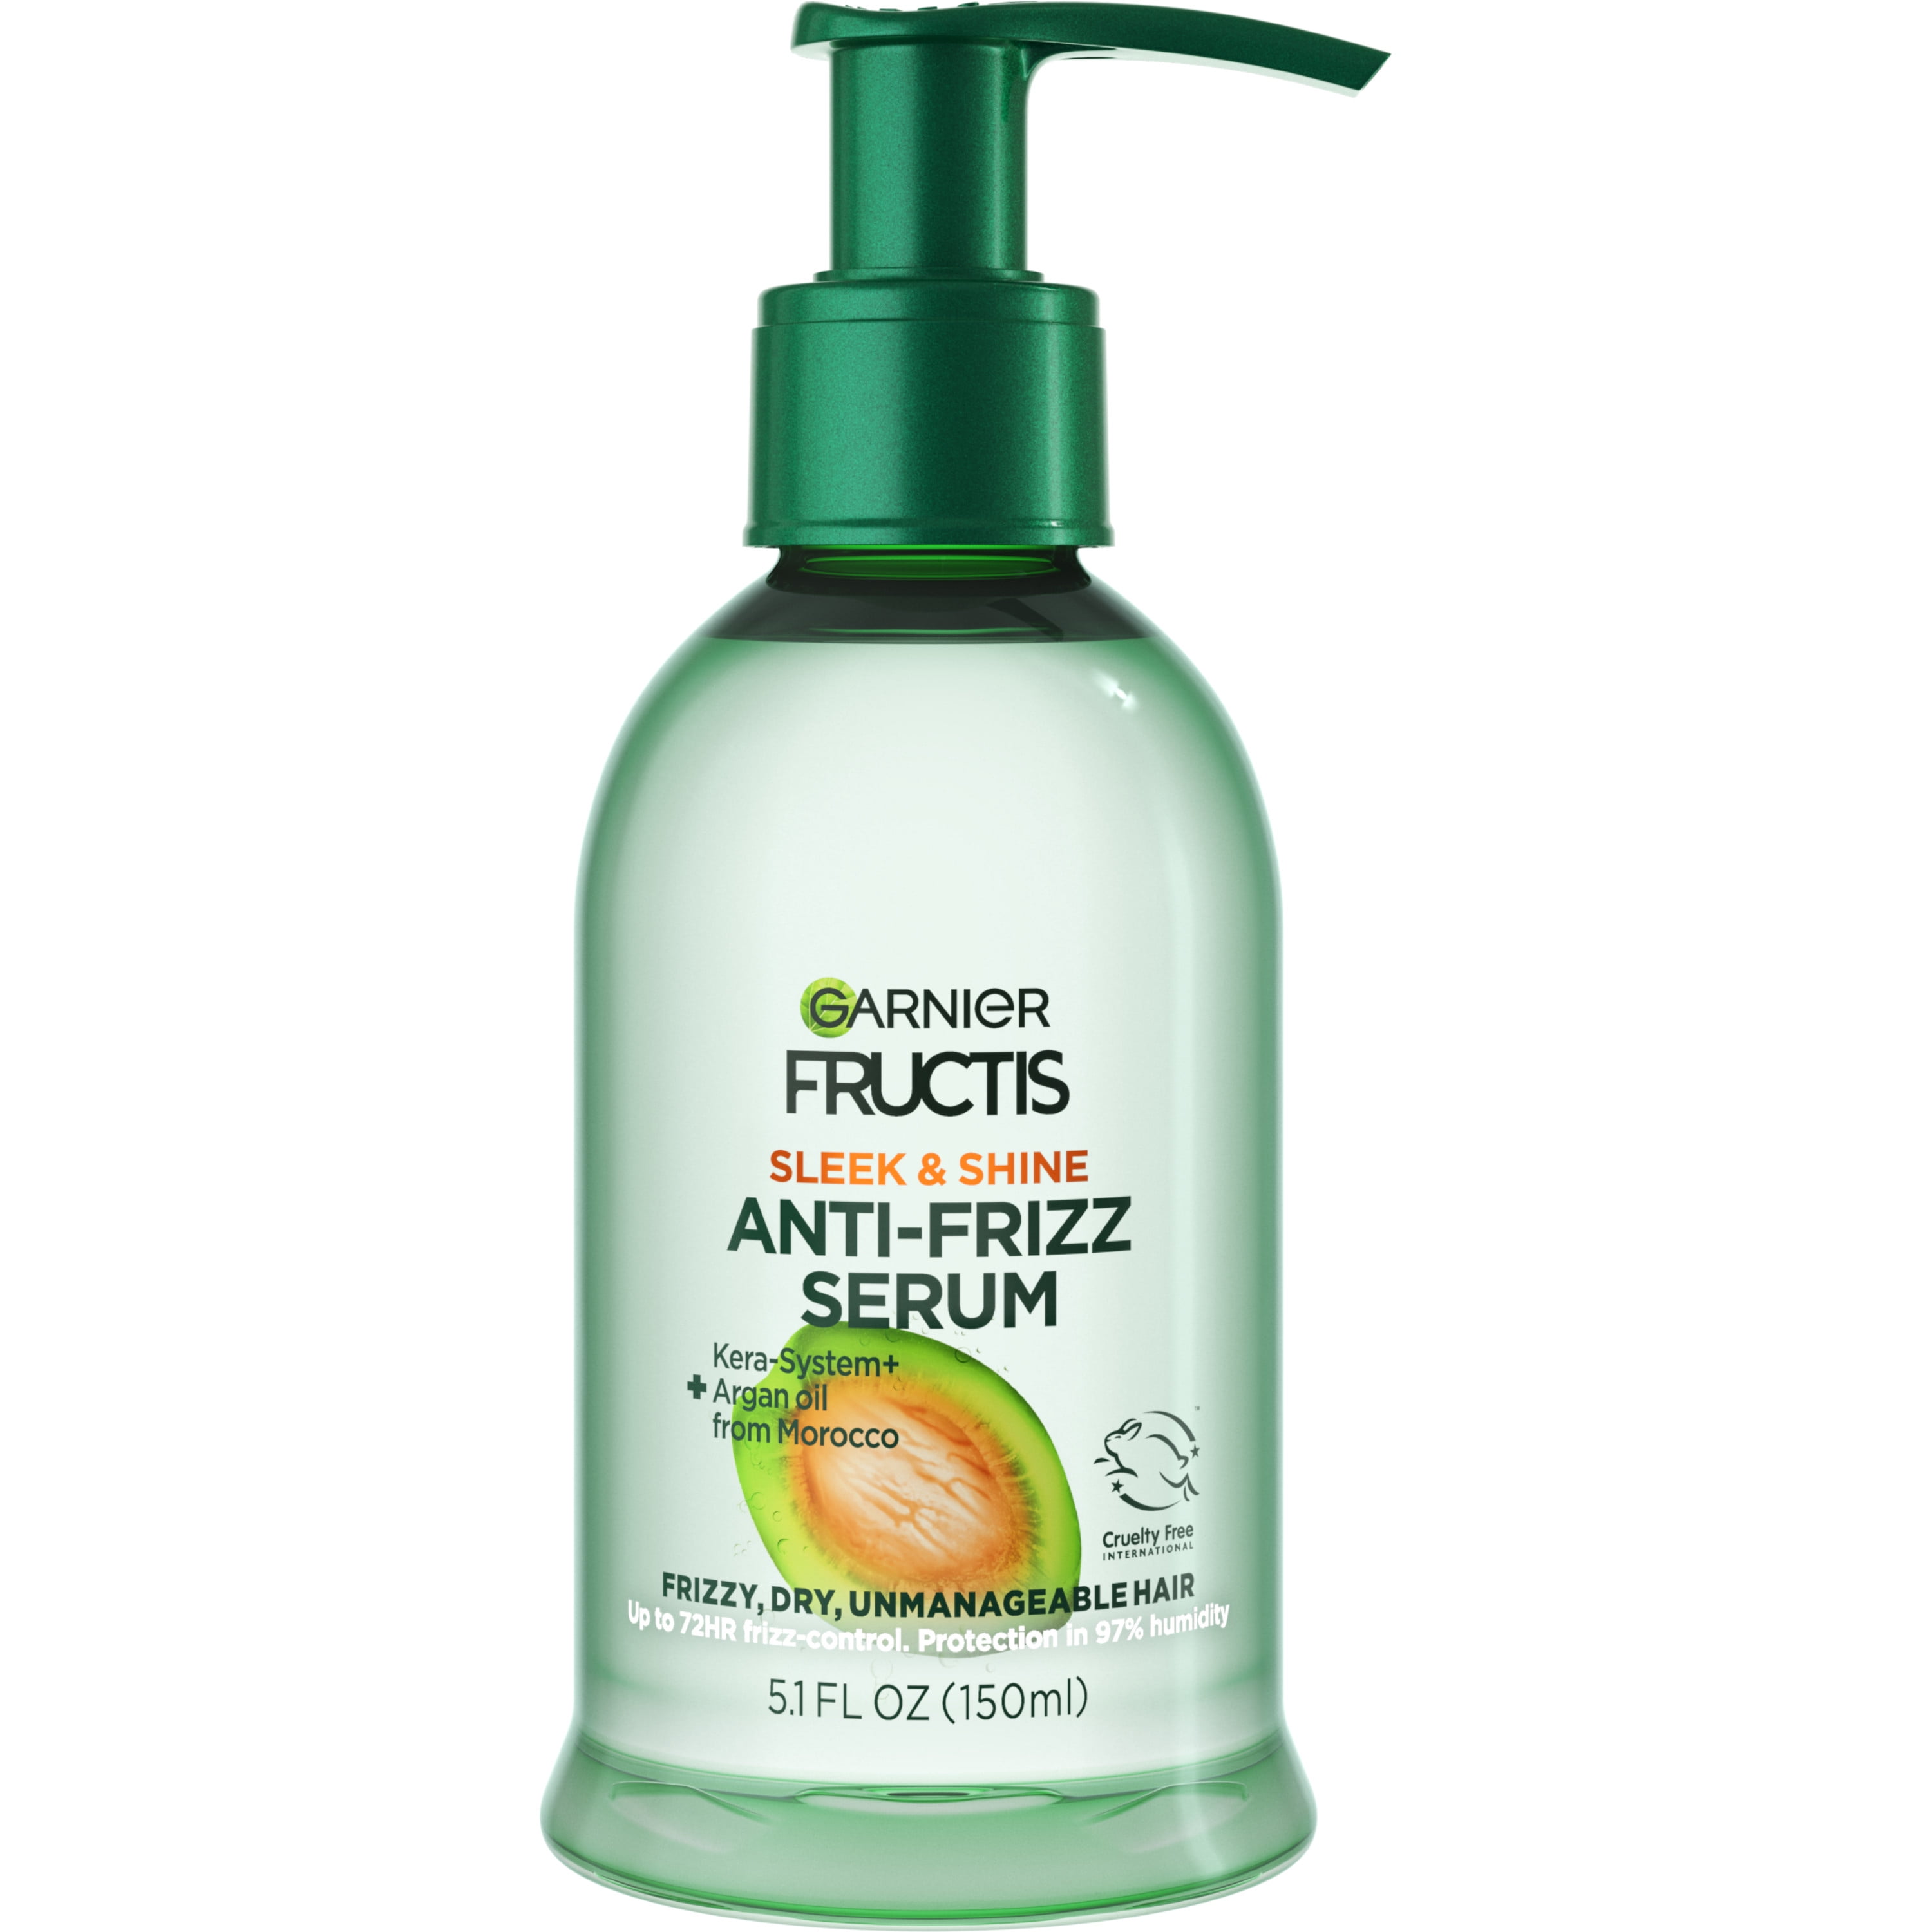 Garnier Fructis Sleek & Shine Anti-Frizz Serum for Frizzy, Dry Hair, 5.1 fl oz